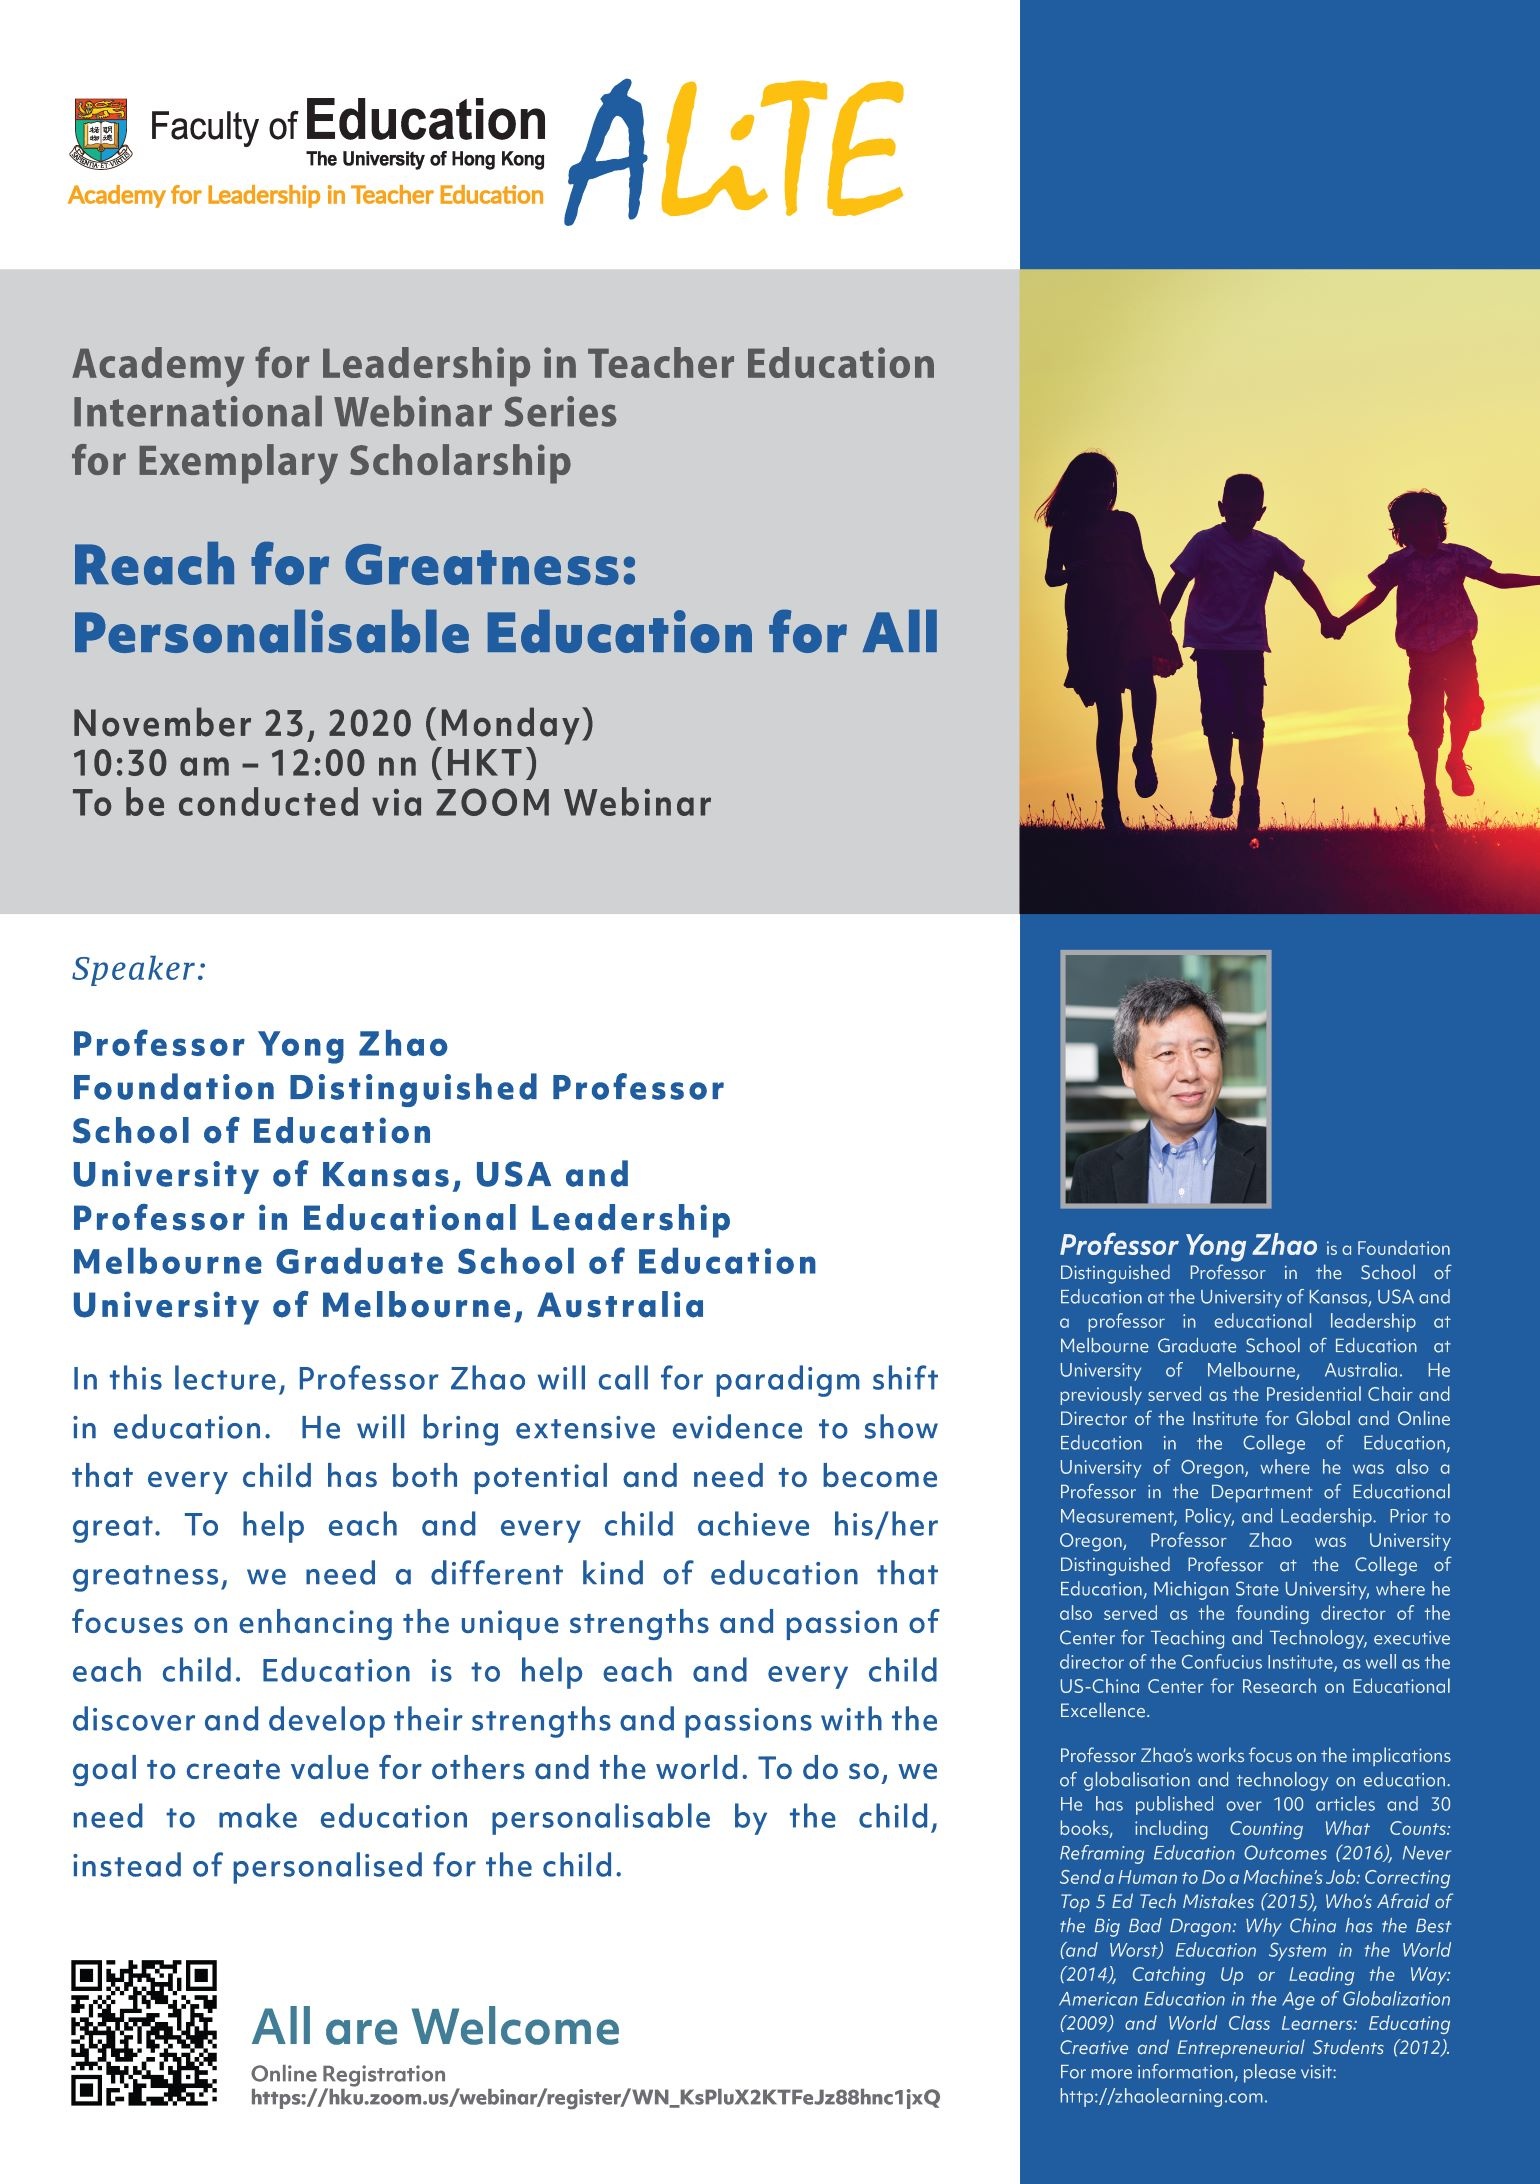 Academy for Leadership in Teacher Education (ALiTE) International Webinar Series for Exemplary Scholarship 